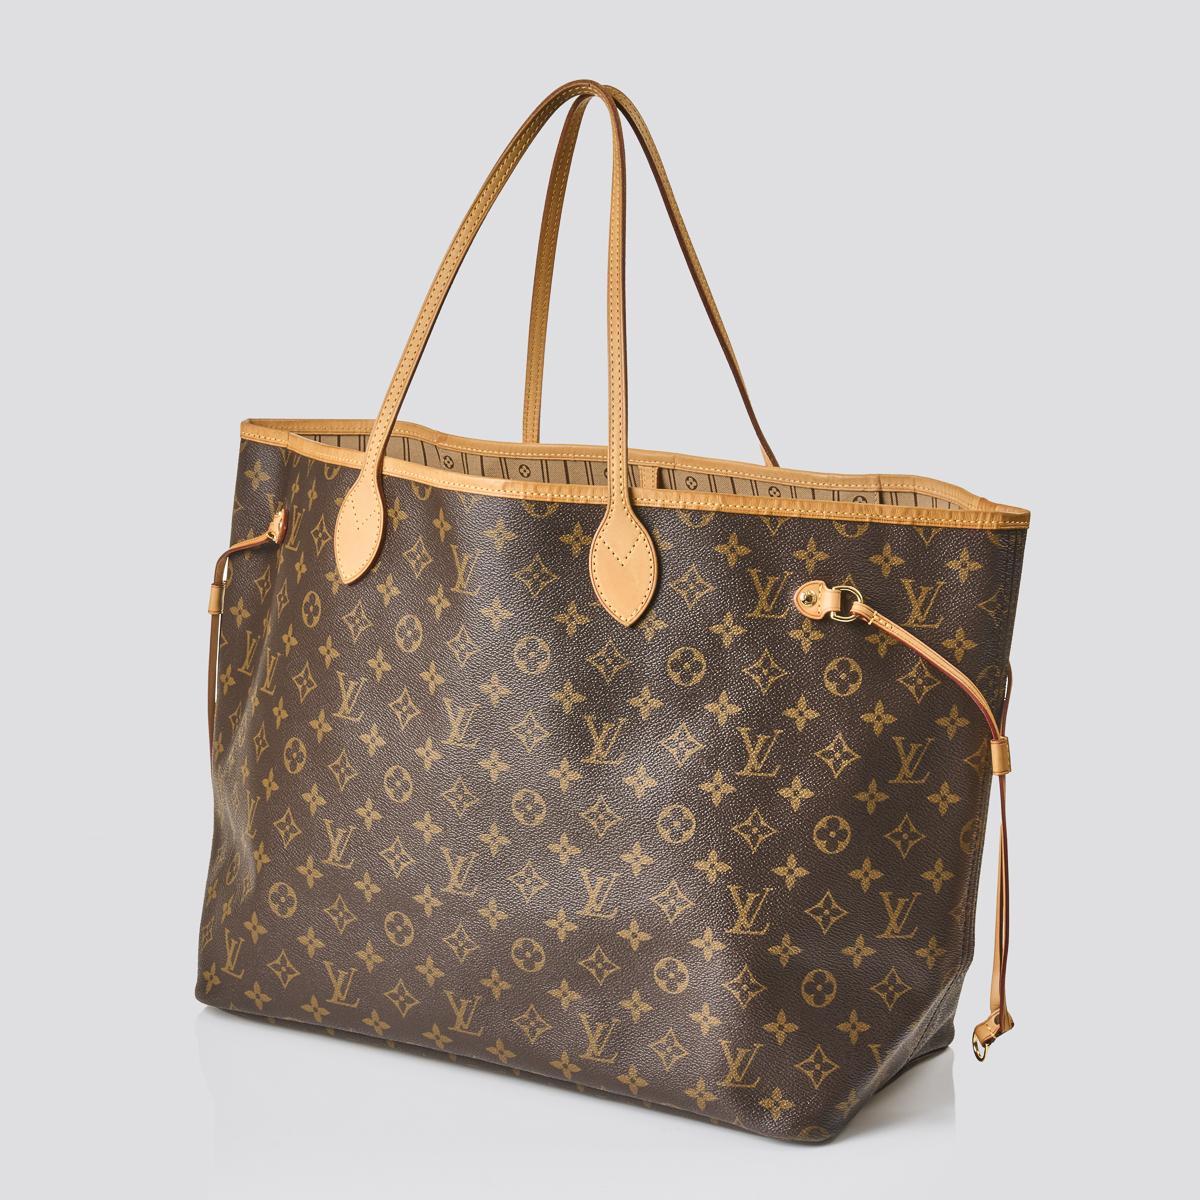 Sold at Auction: Louis Vuitton, Louis Vuitton, Neverfull Tote Bag